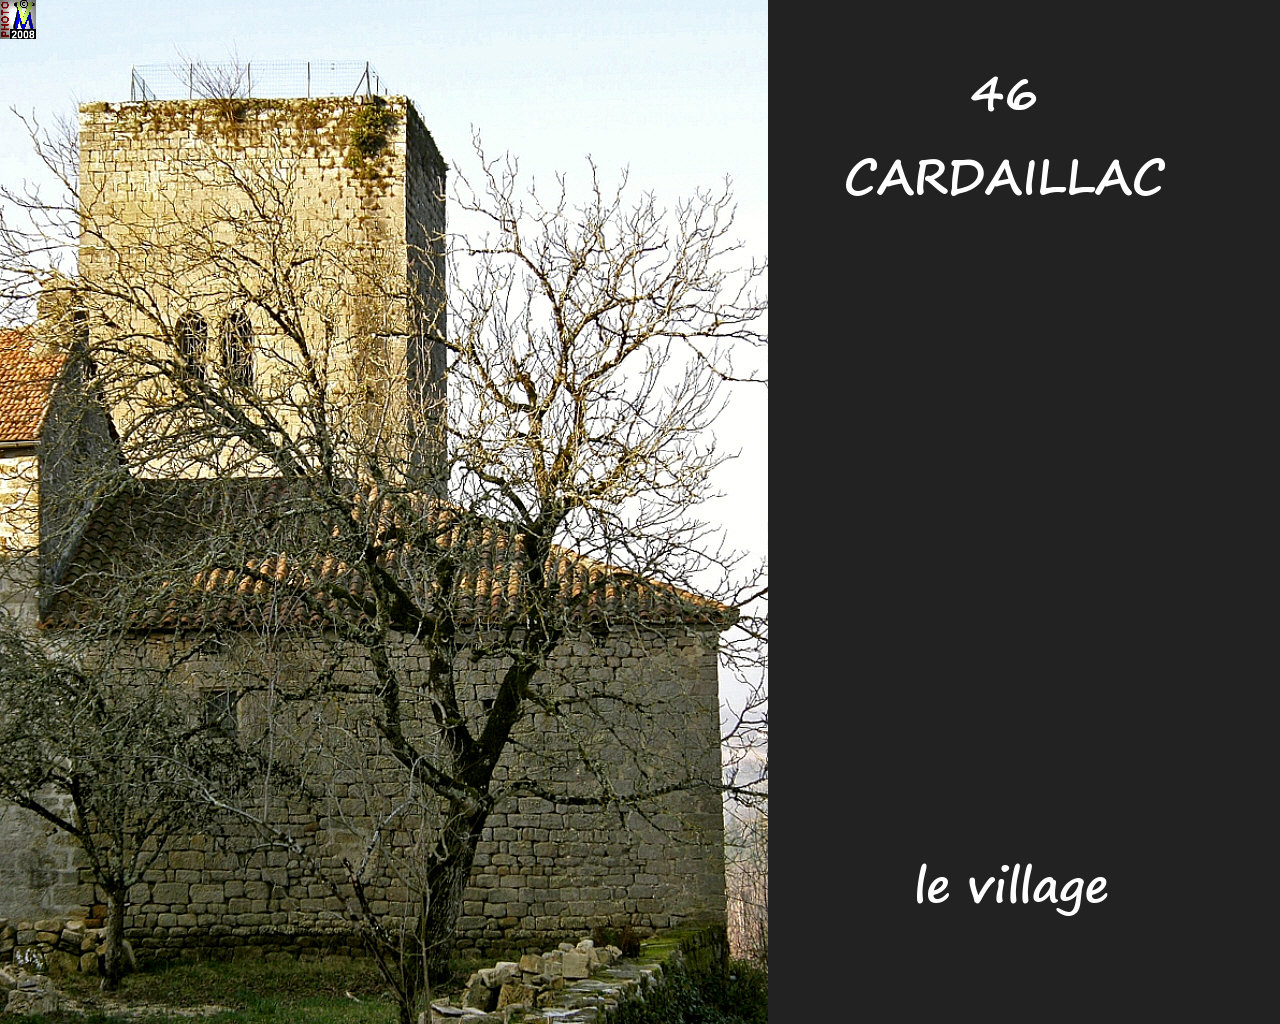 46CARDAILLAC_village_102.jpg